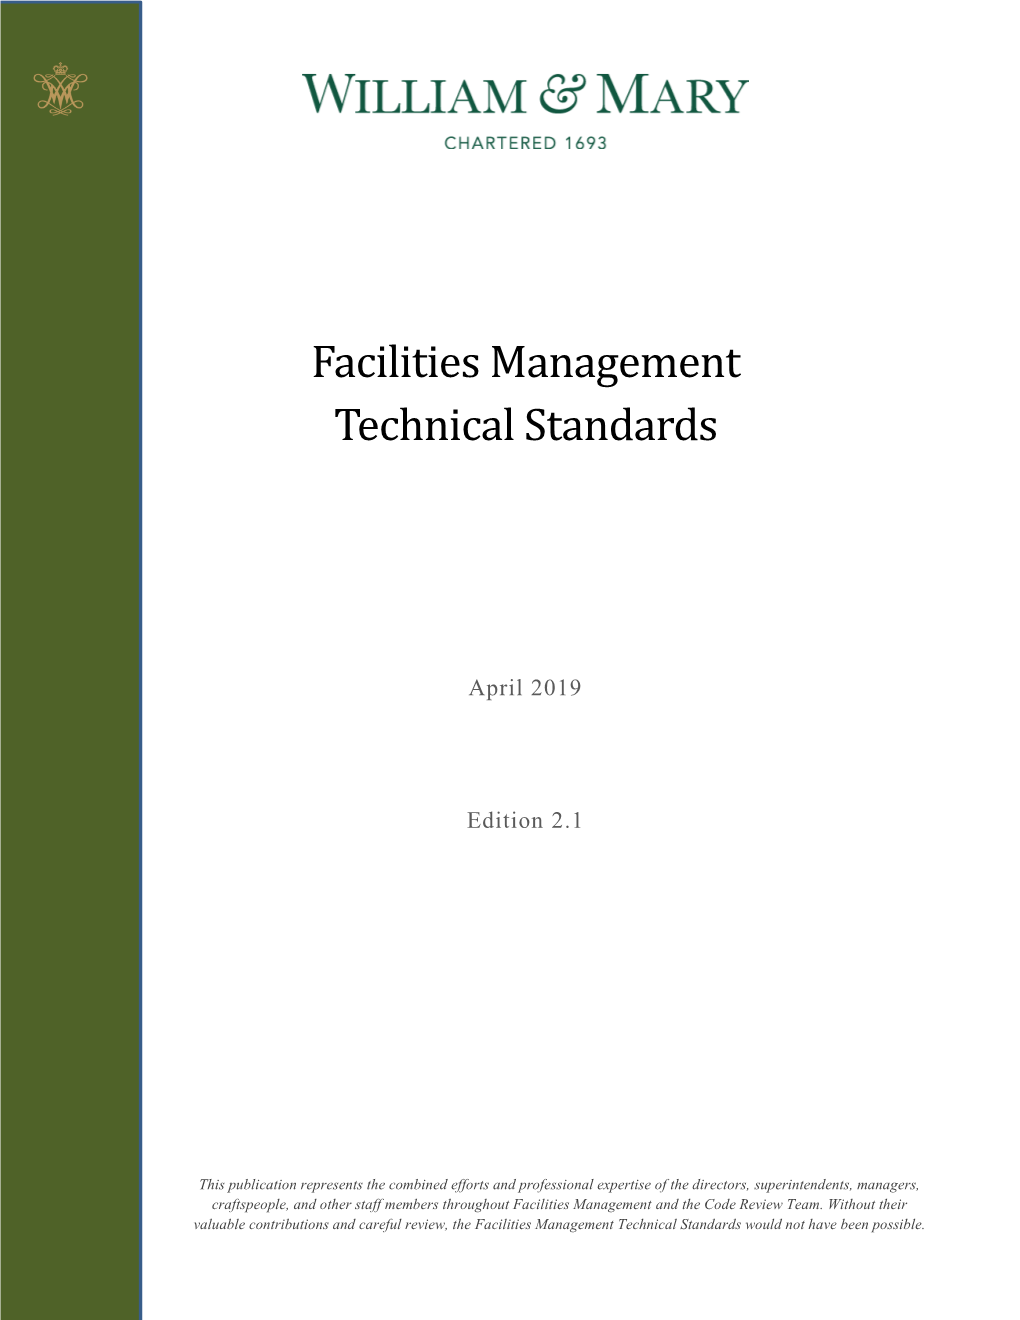 Facilities Management Technical Standards